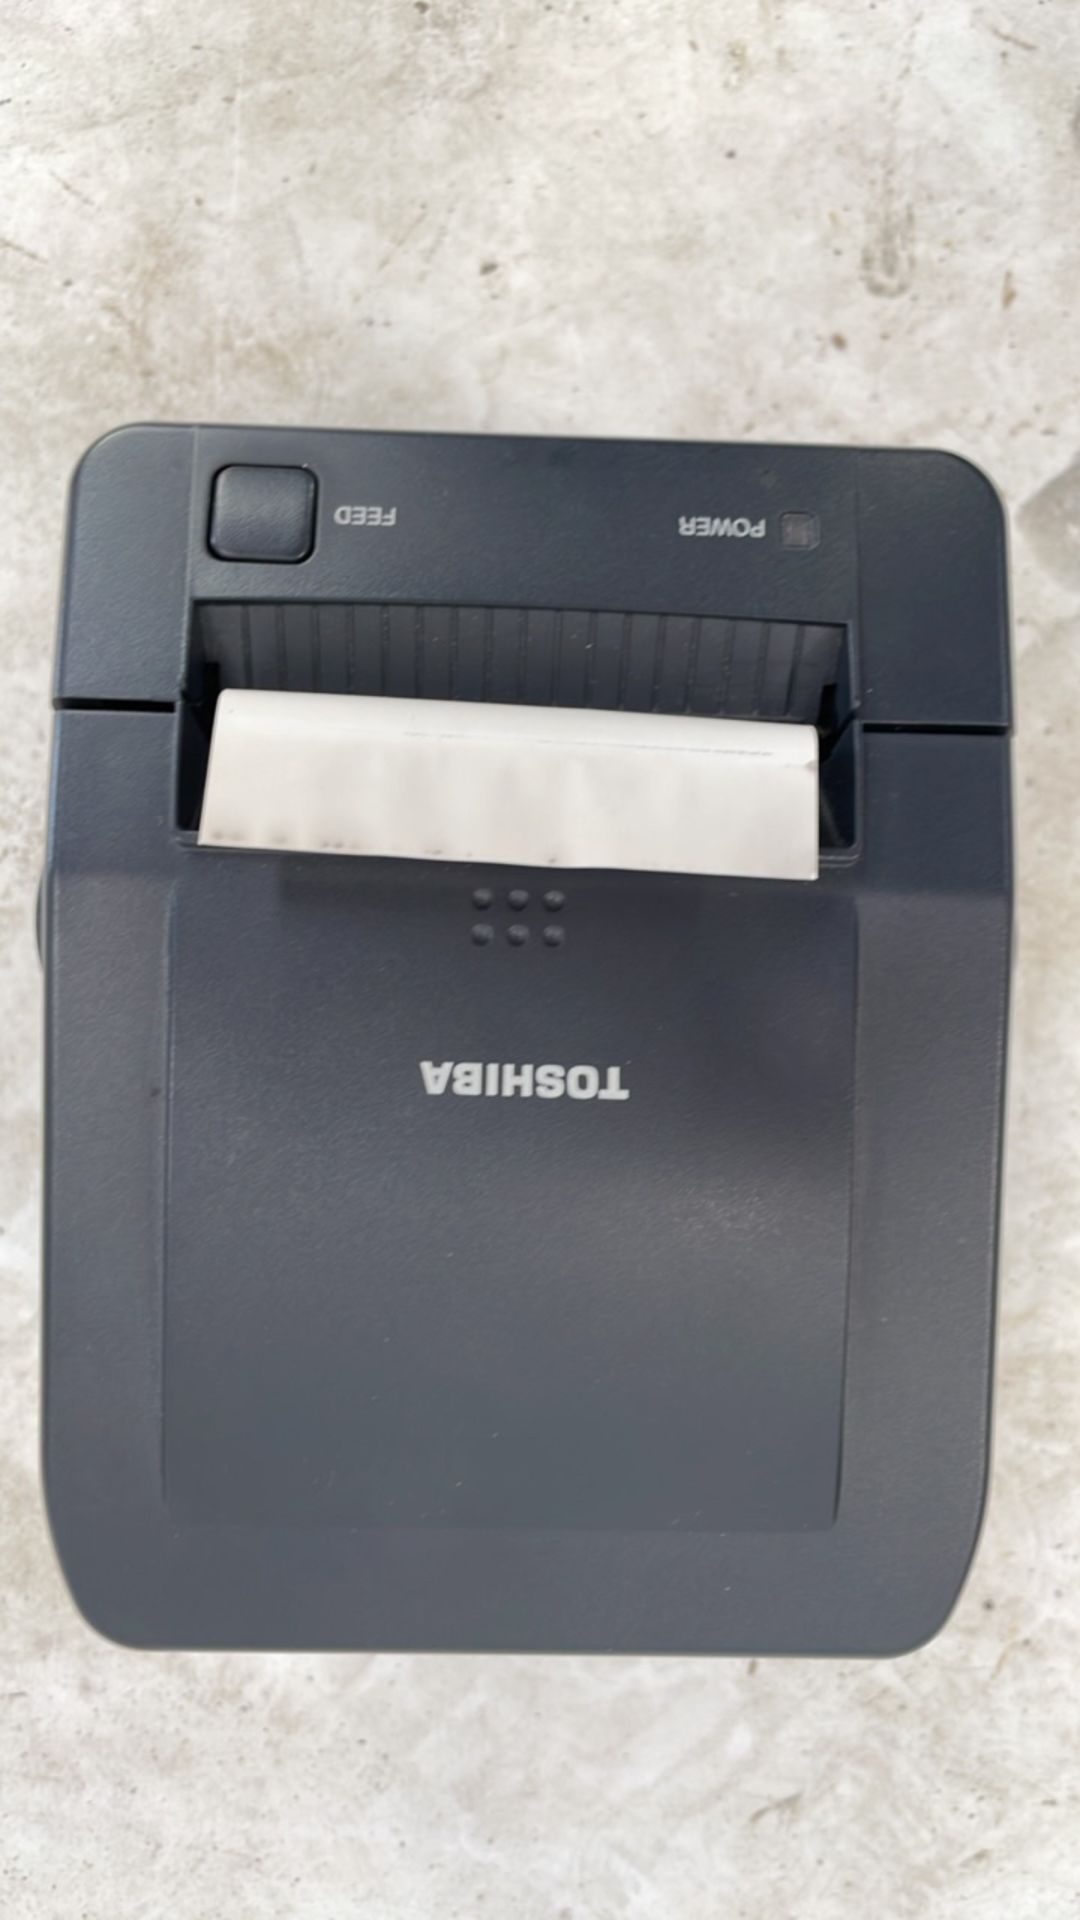 Toshiba Black receipt printer - Image 2 of 3